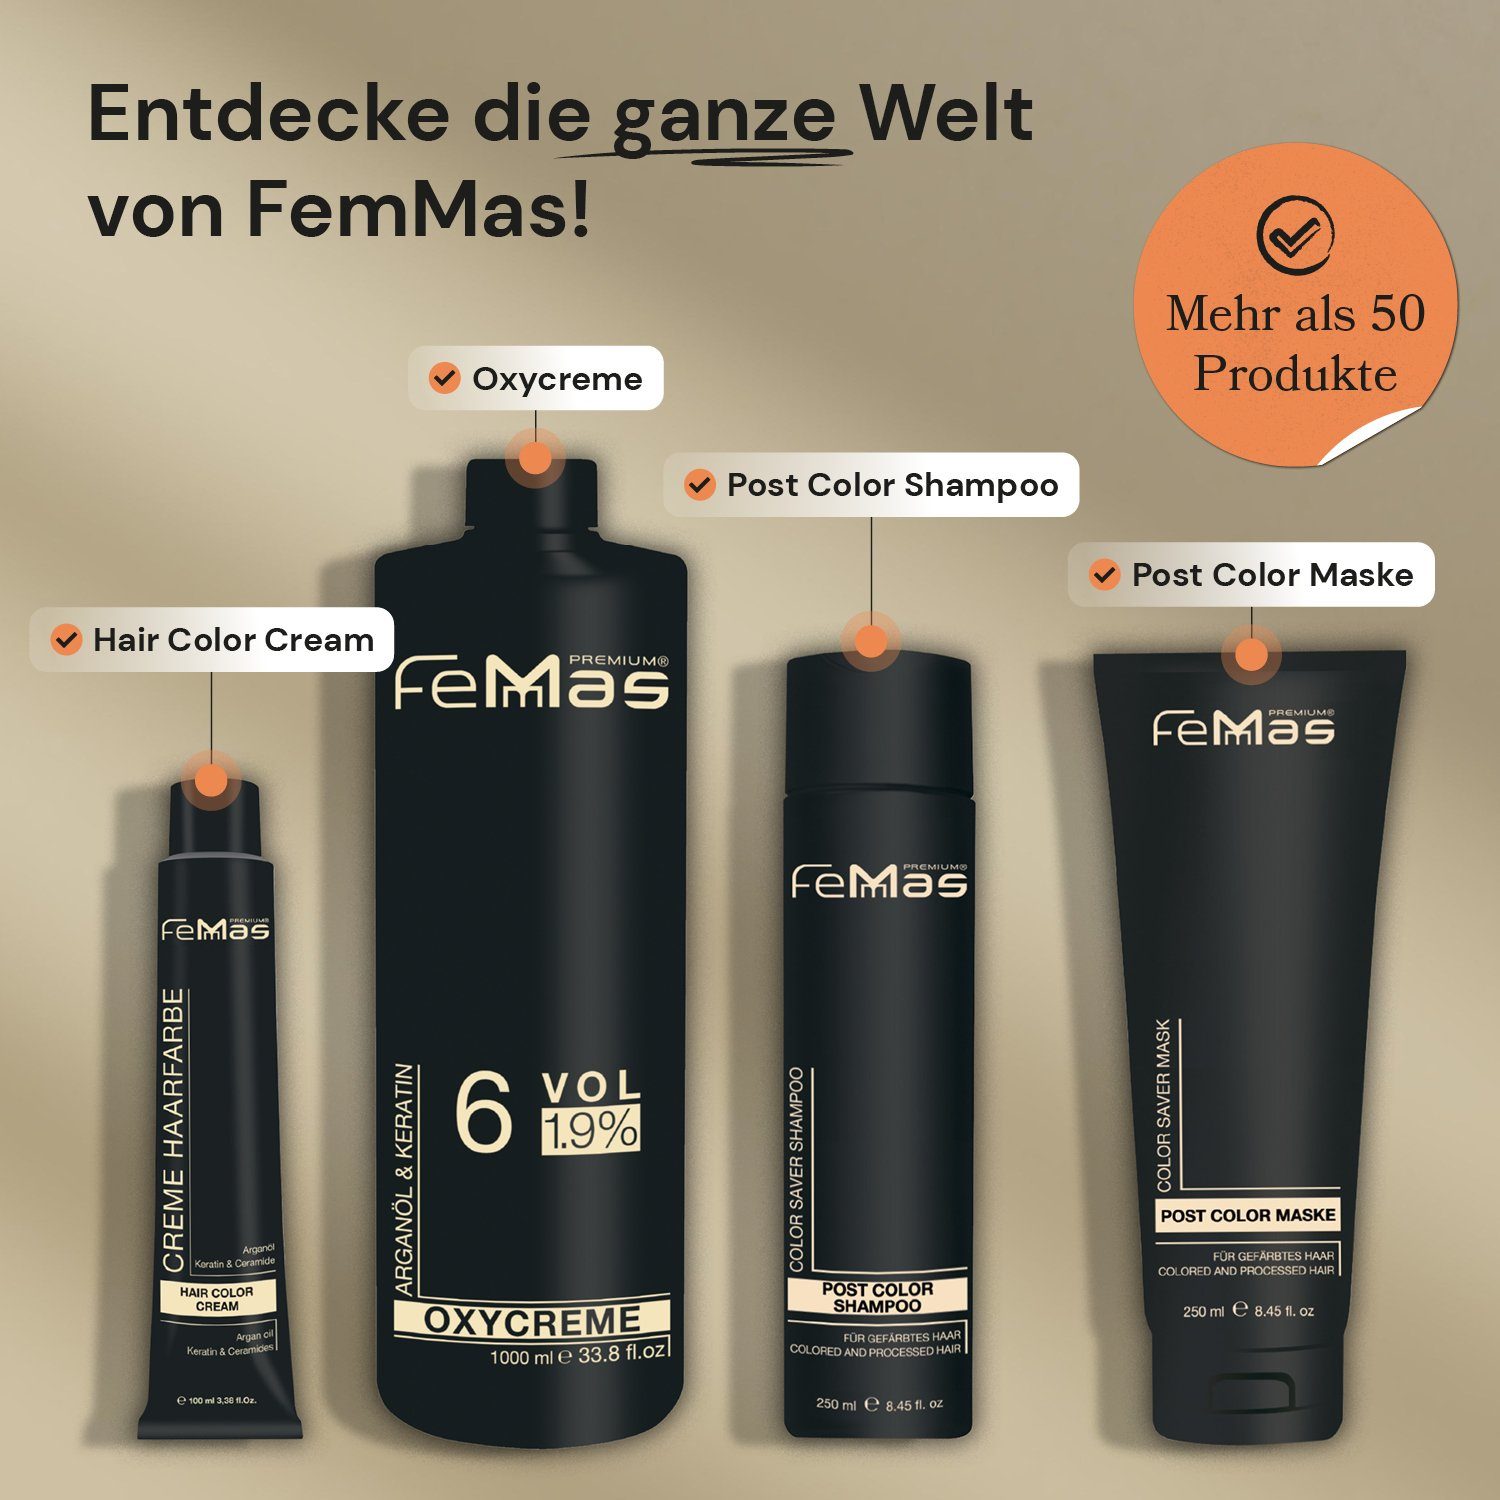 Haarshampoo FemMas Saver 1000ml Dosierpumpe Shampoo inklusive Femmas Premium Color